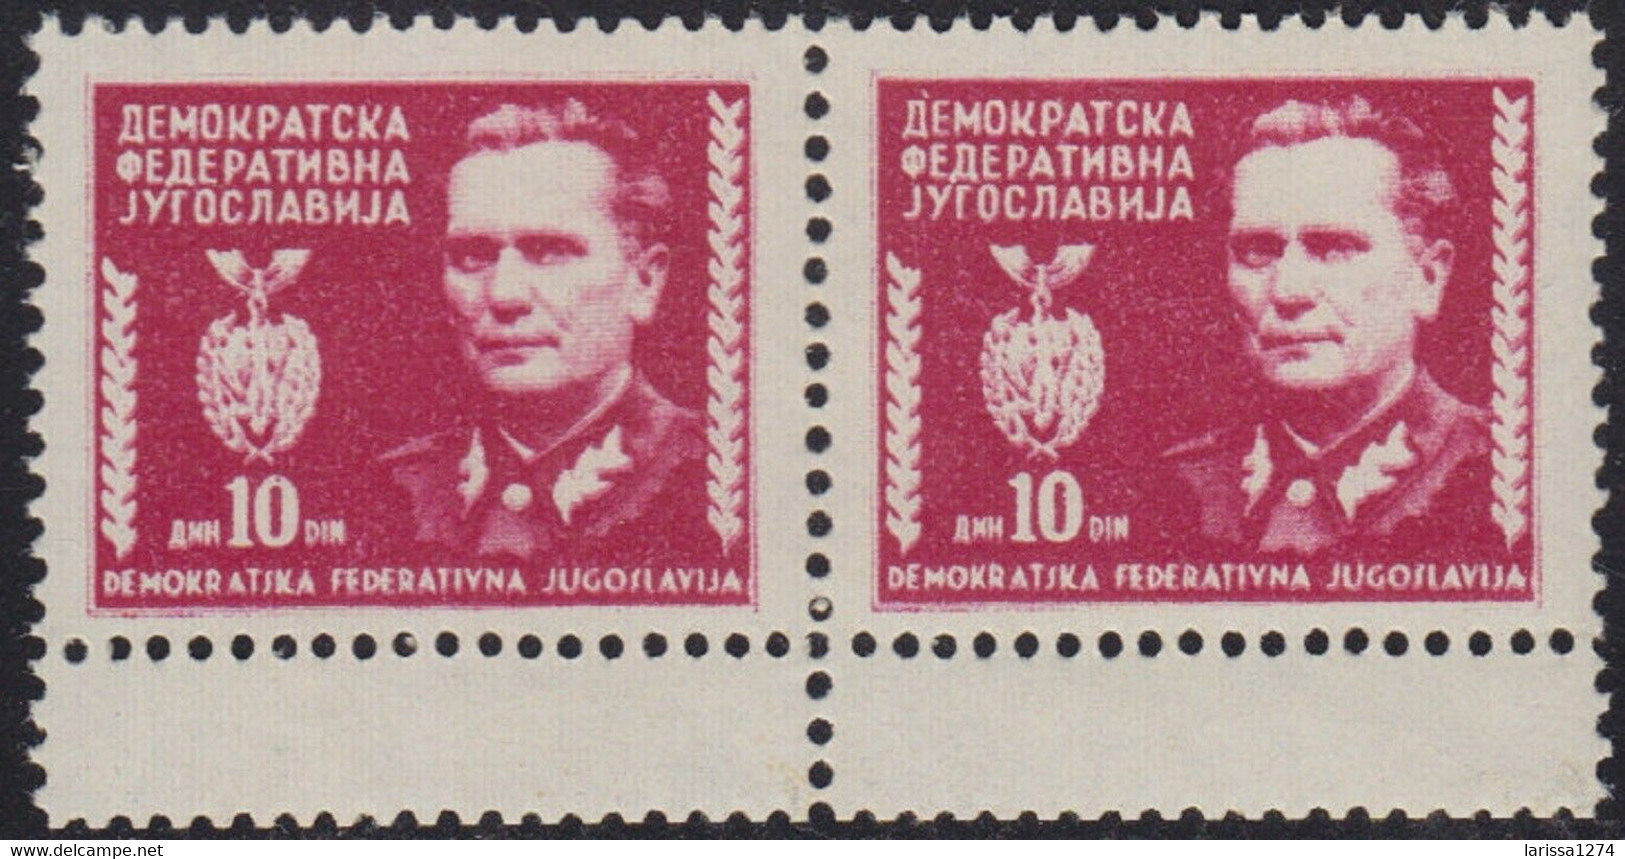 535.Yugoslavia 1945 Tito ERROR Double Perforation MNH Michel 455 - Imperforates, Proofs & Errors